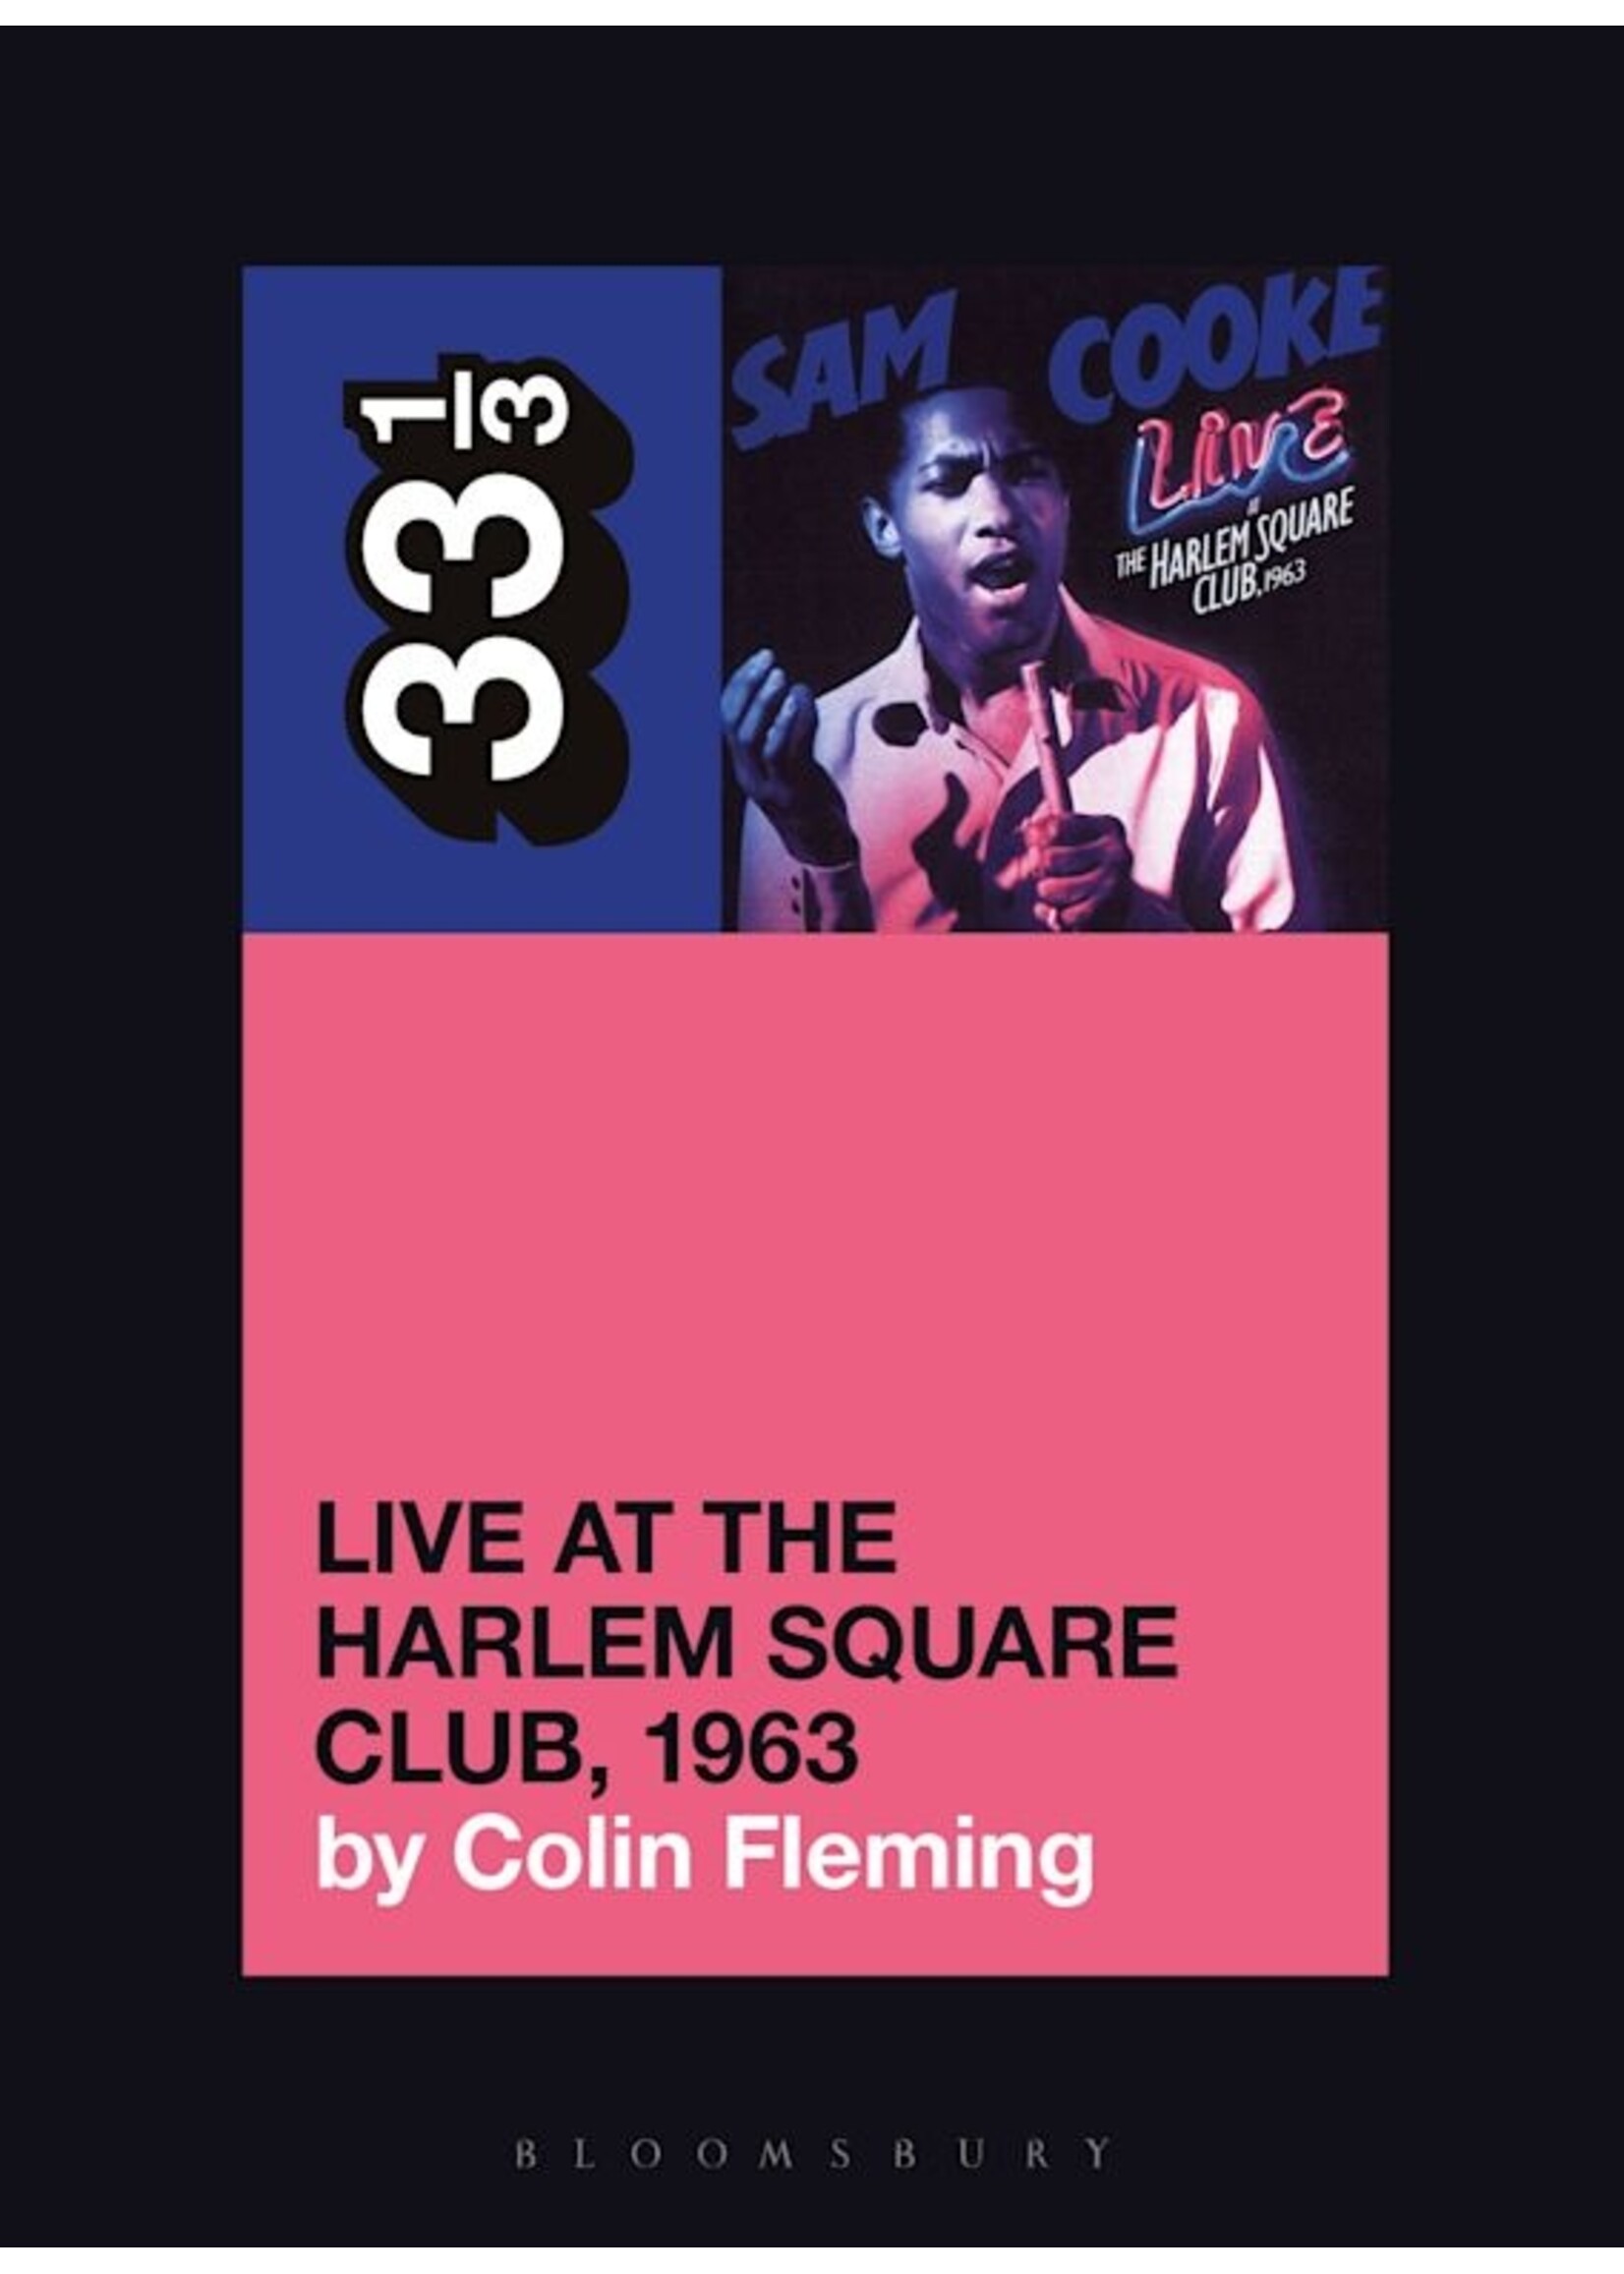 33 1/3 Fleming/Sam Cooke's Live at the Harlem Square Club, 1963